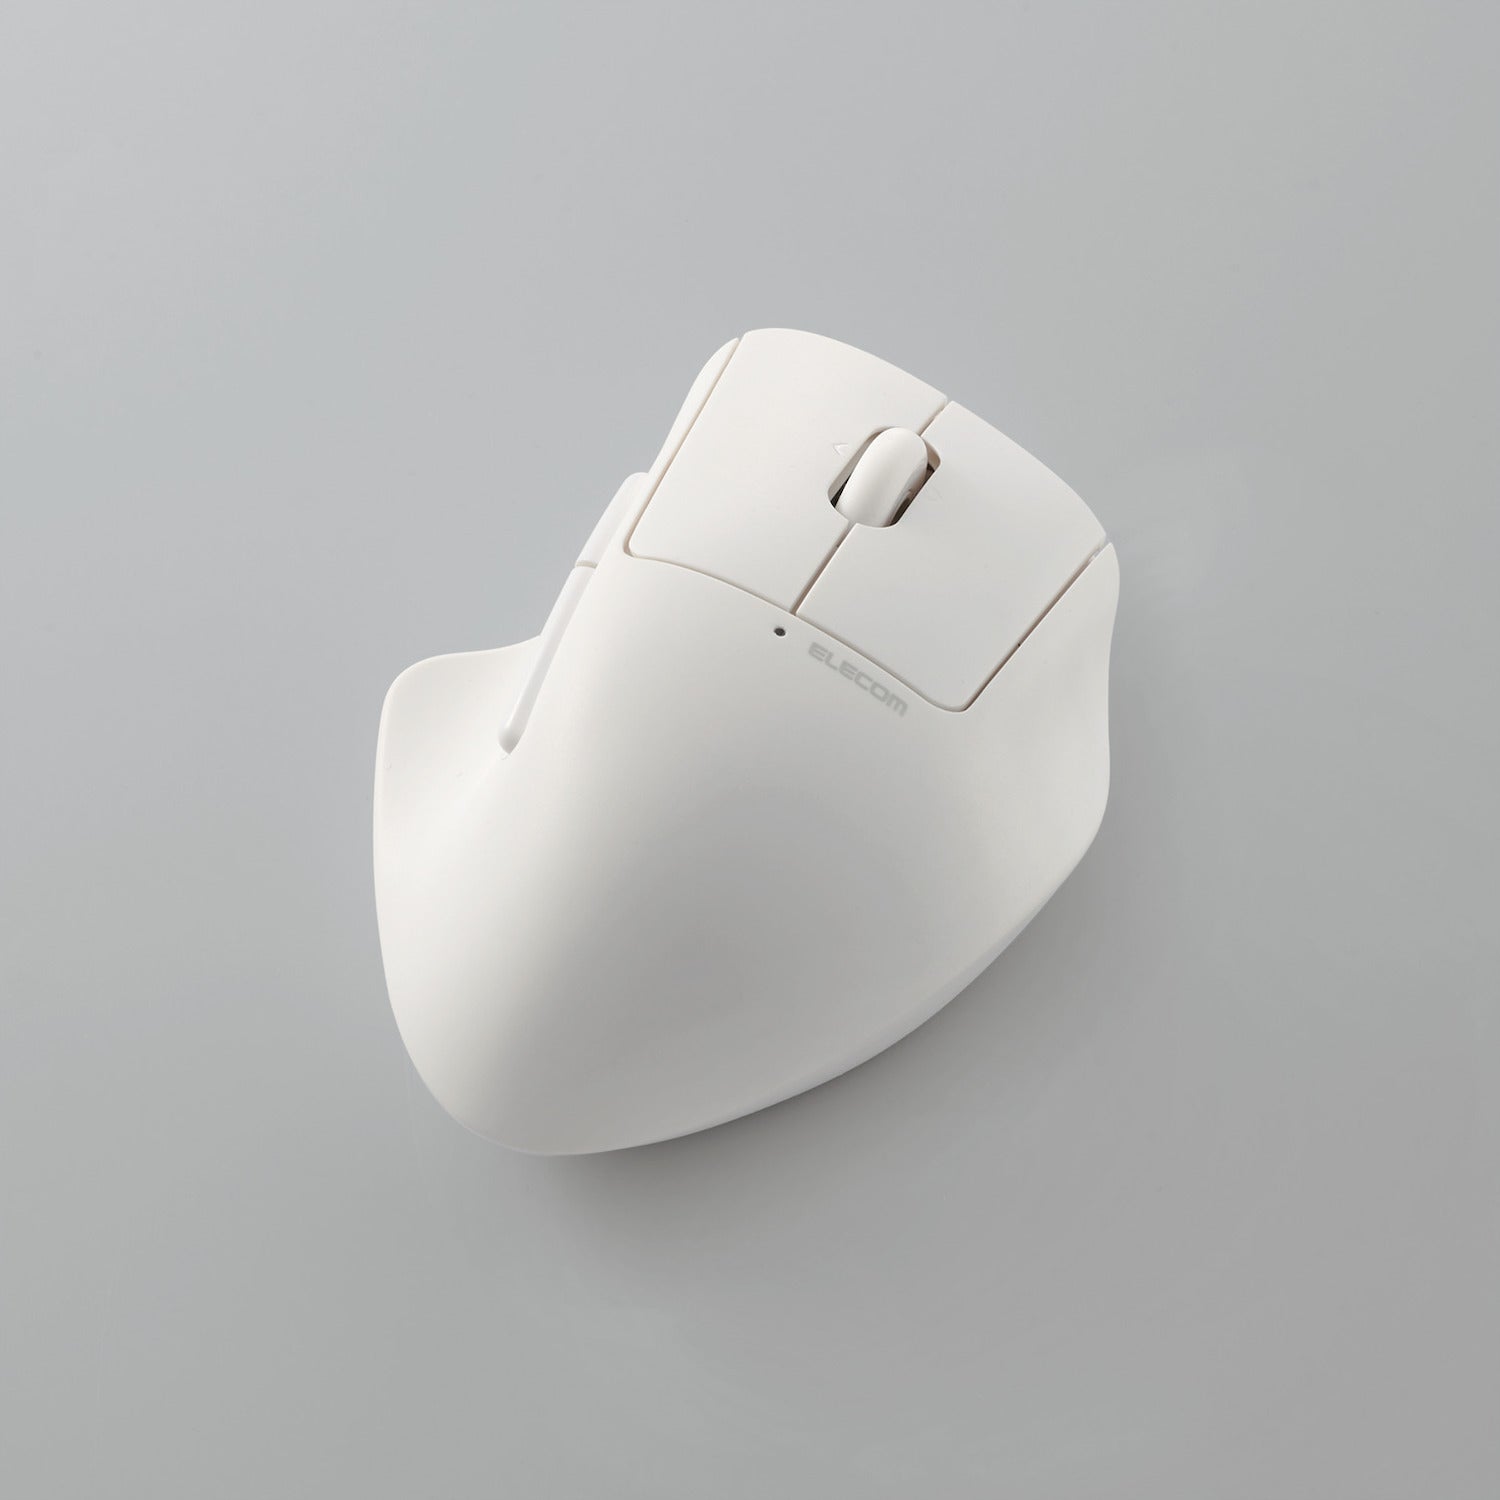 SH30 Ergonomic Mouse - Bluetooth